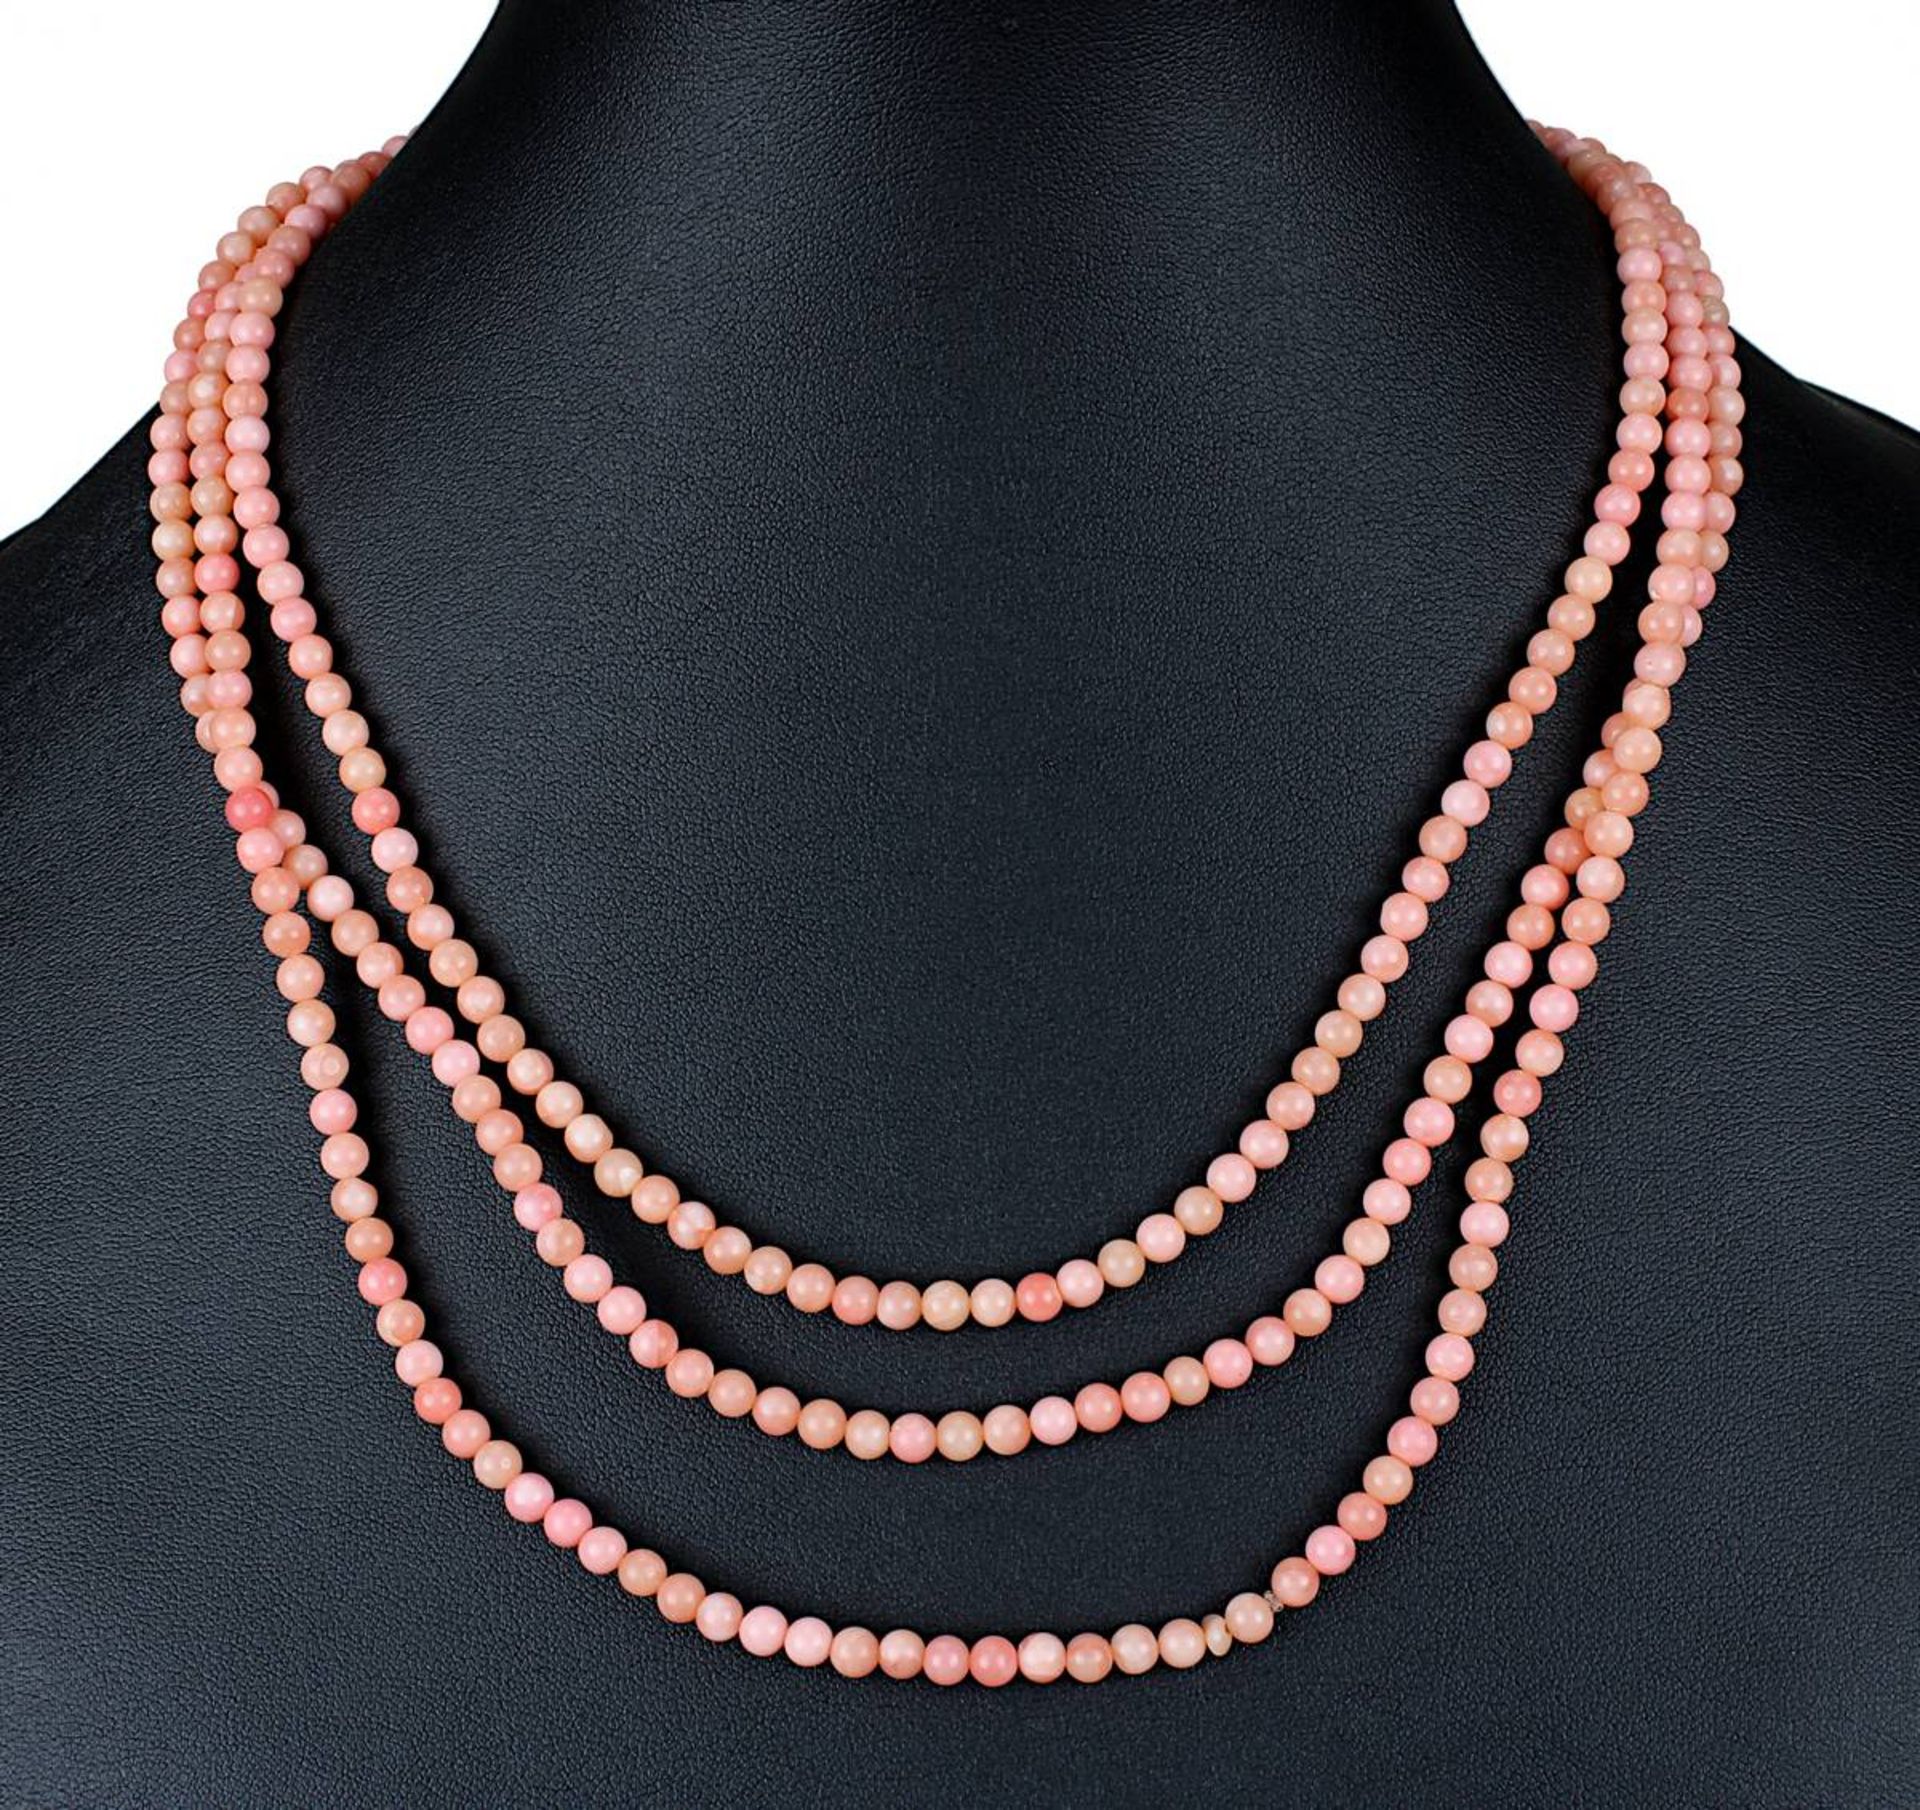 Lange Kette aus hellen rosa-lachsfarbenen Korallenperlen, D je Perle ca. 4,5 mm, L 159 cm, Gewicht